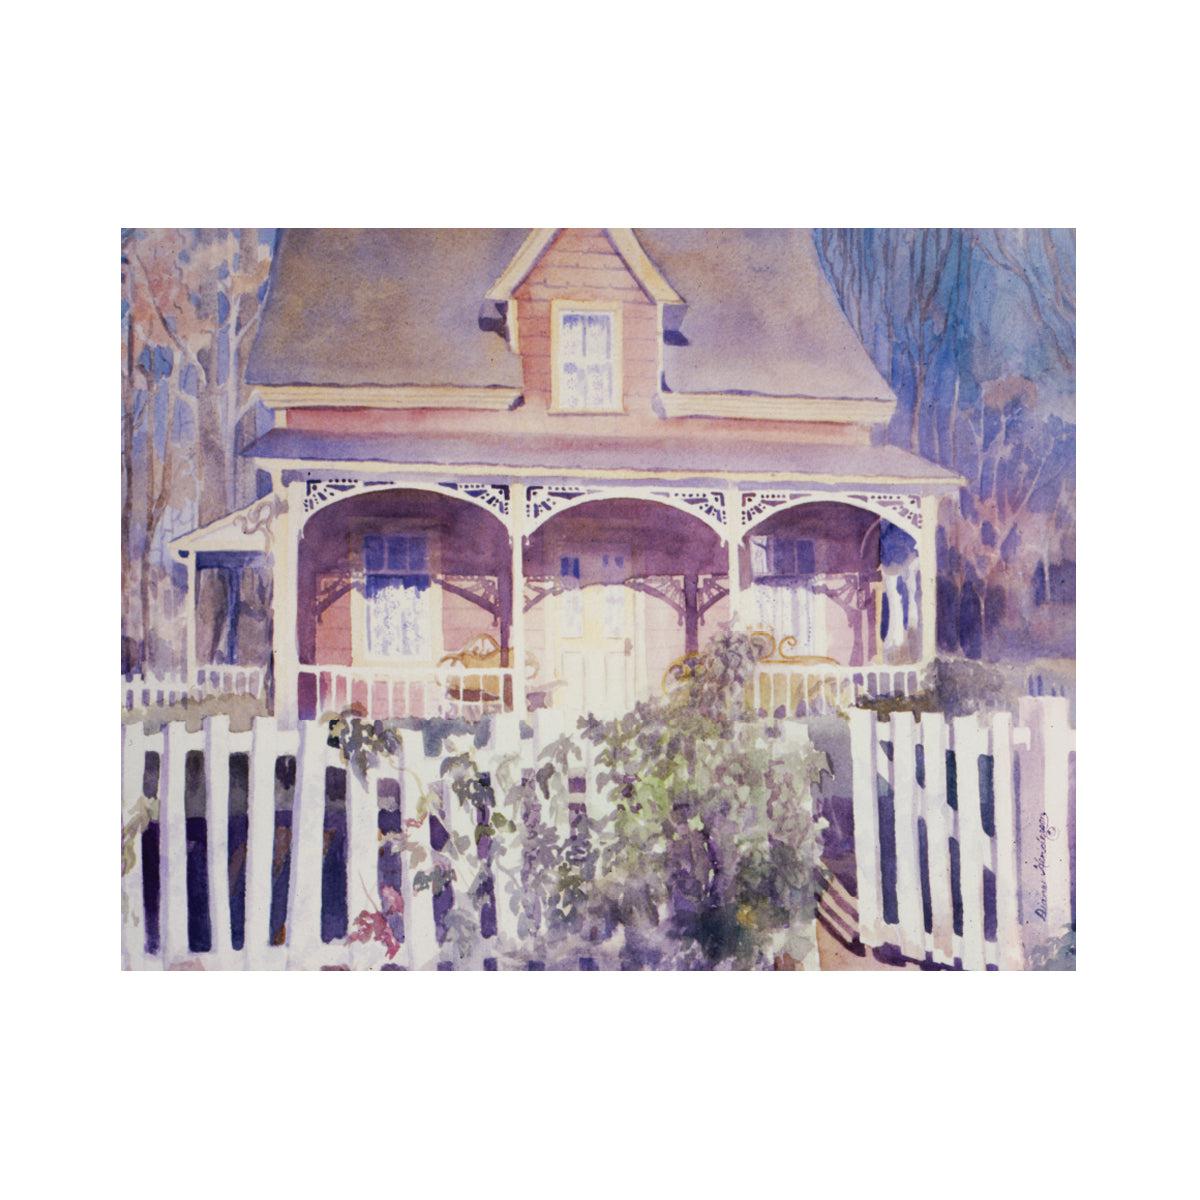 "Biggins Boarding House" By Diane Henderson, On Watercolor Paper